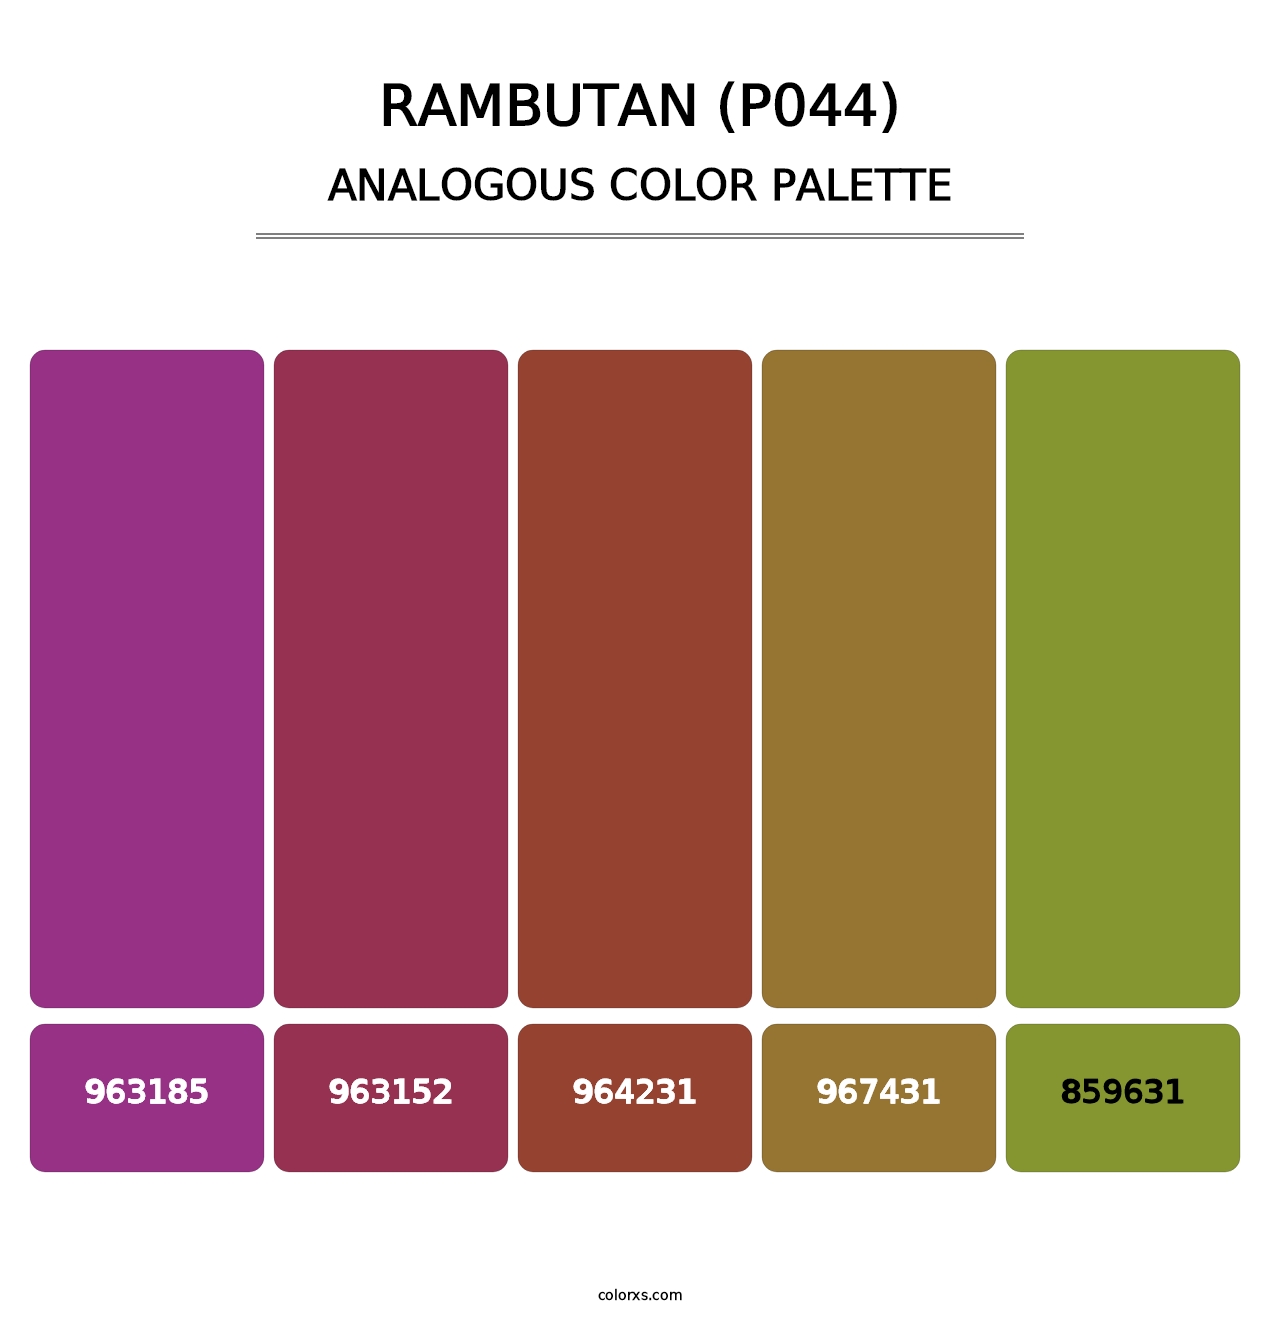 Rambutan (P044) - Analogous Color Palette